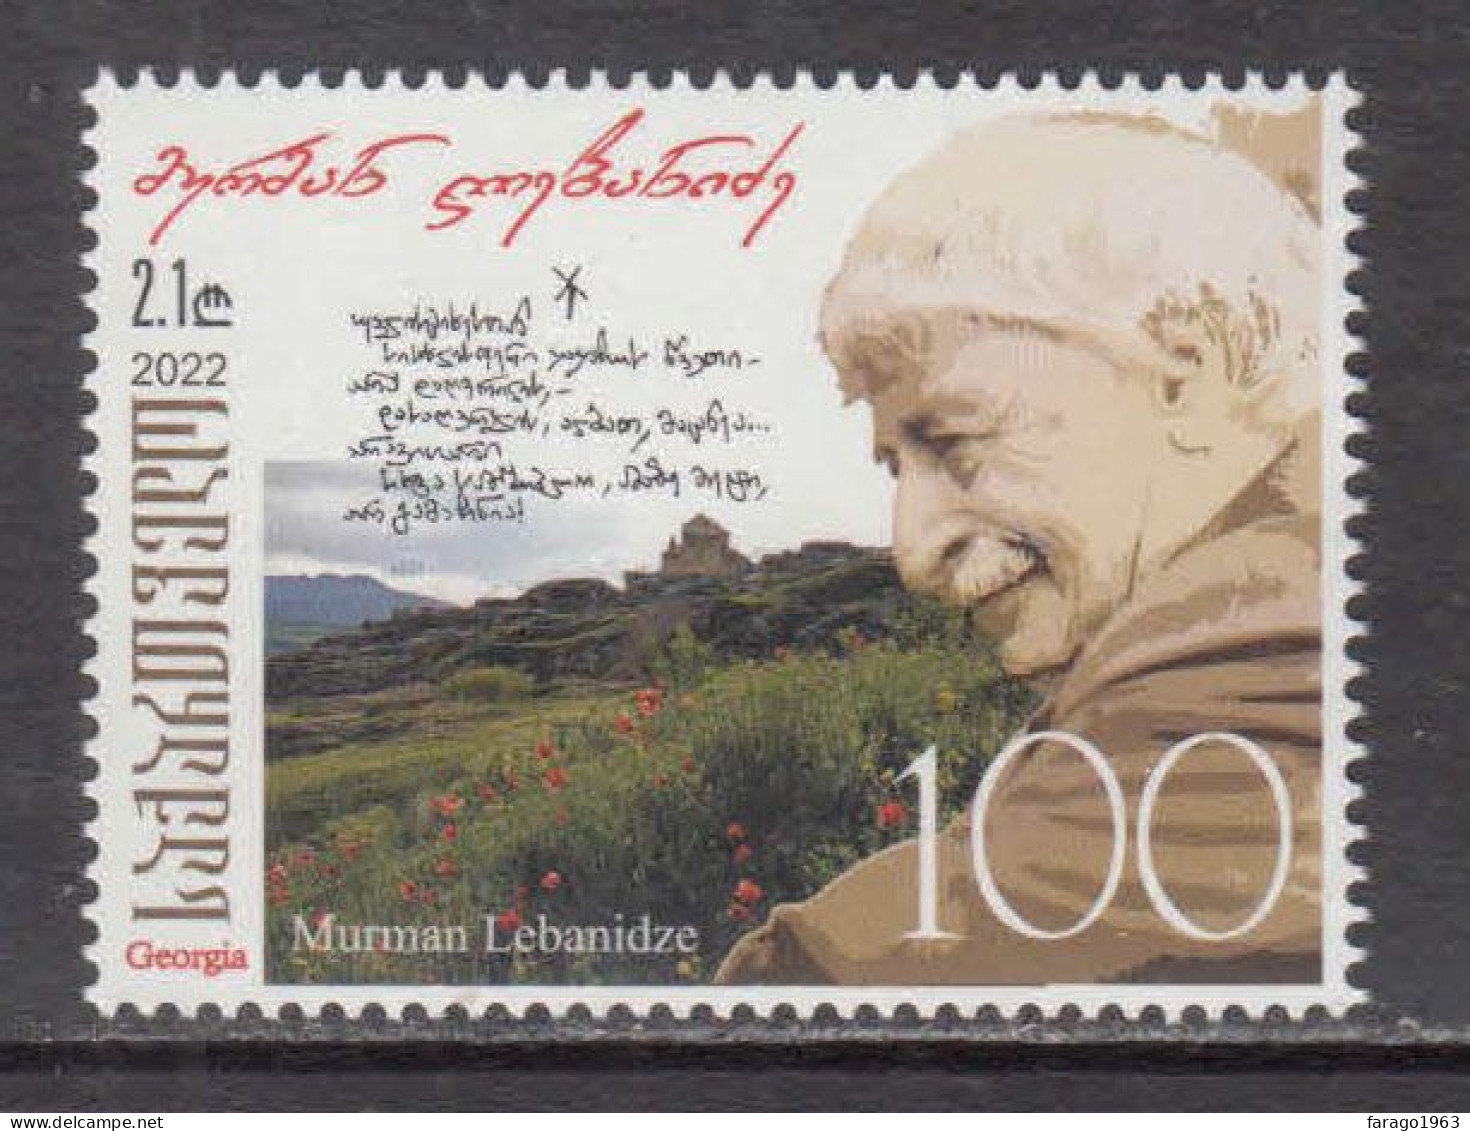 2022 Georgia 100th Anniversary Of The Birth Of Murman Lebanidze, 1922-2002 Complete Set Of 1 MNH - Georgia